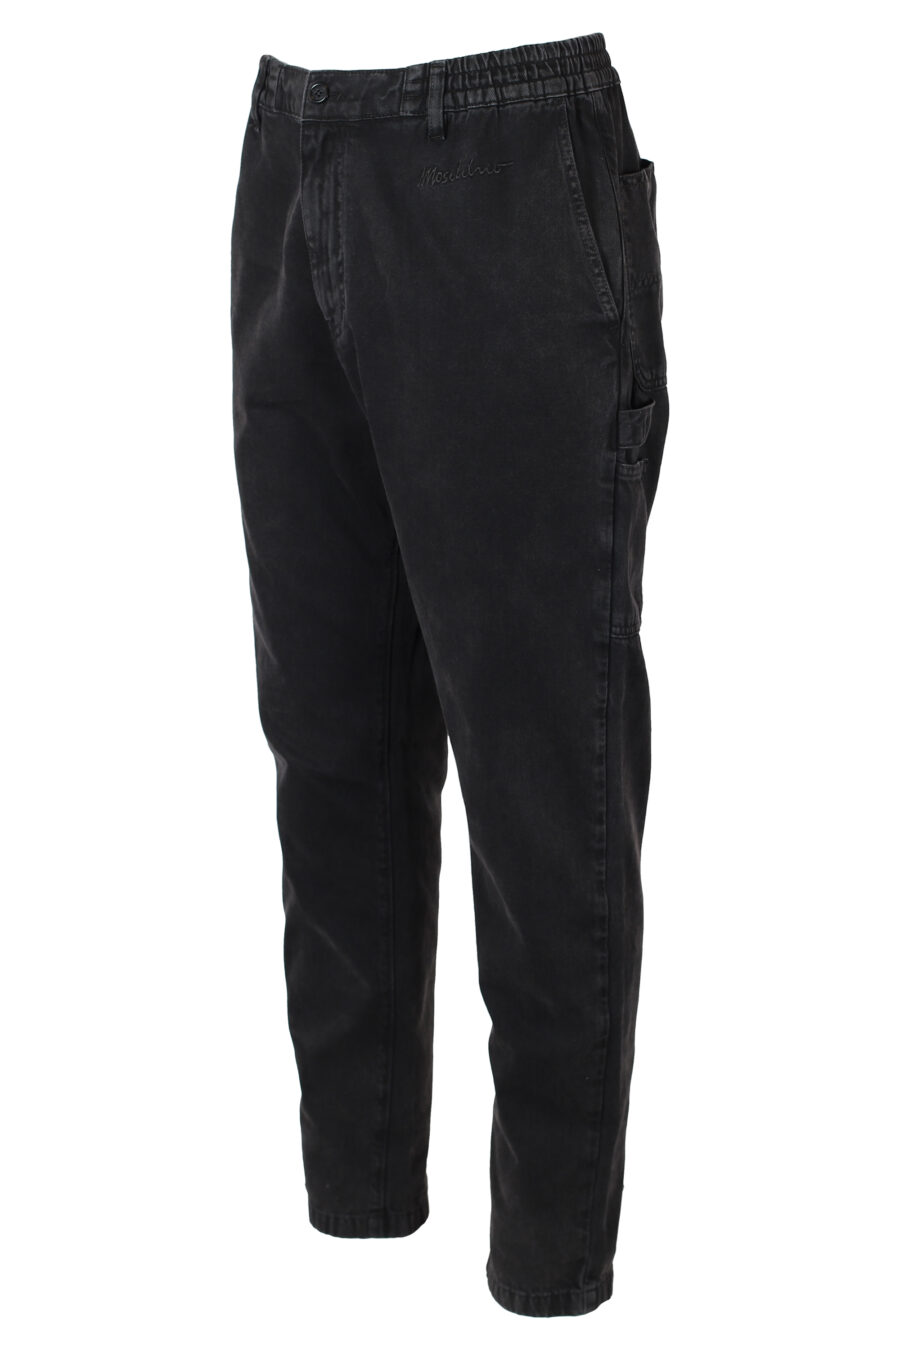 Schwarze Jeans mit monochromem Minilook - IMG 9879